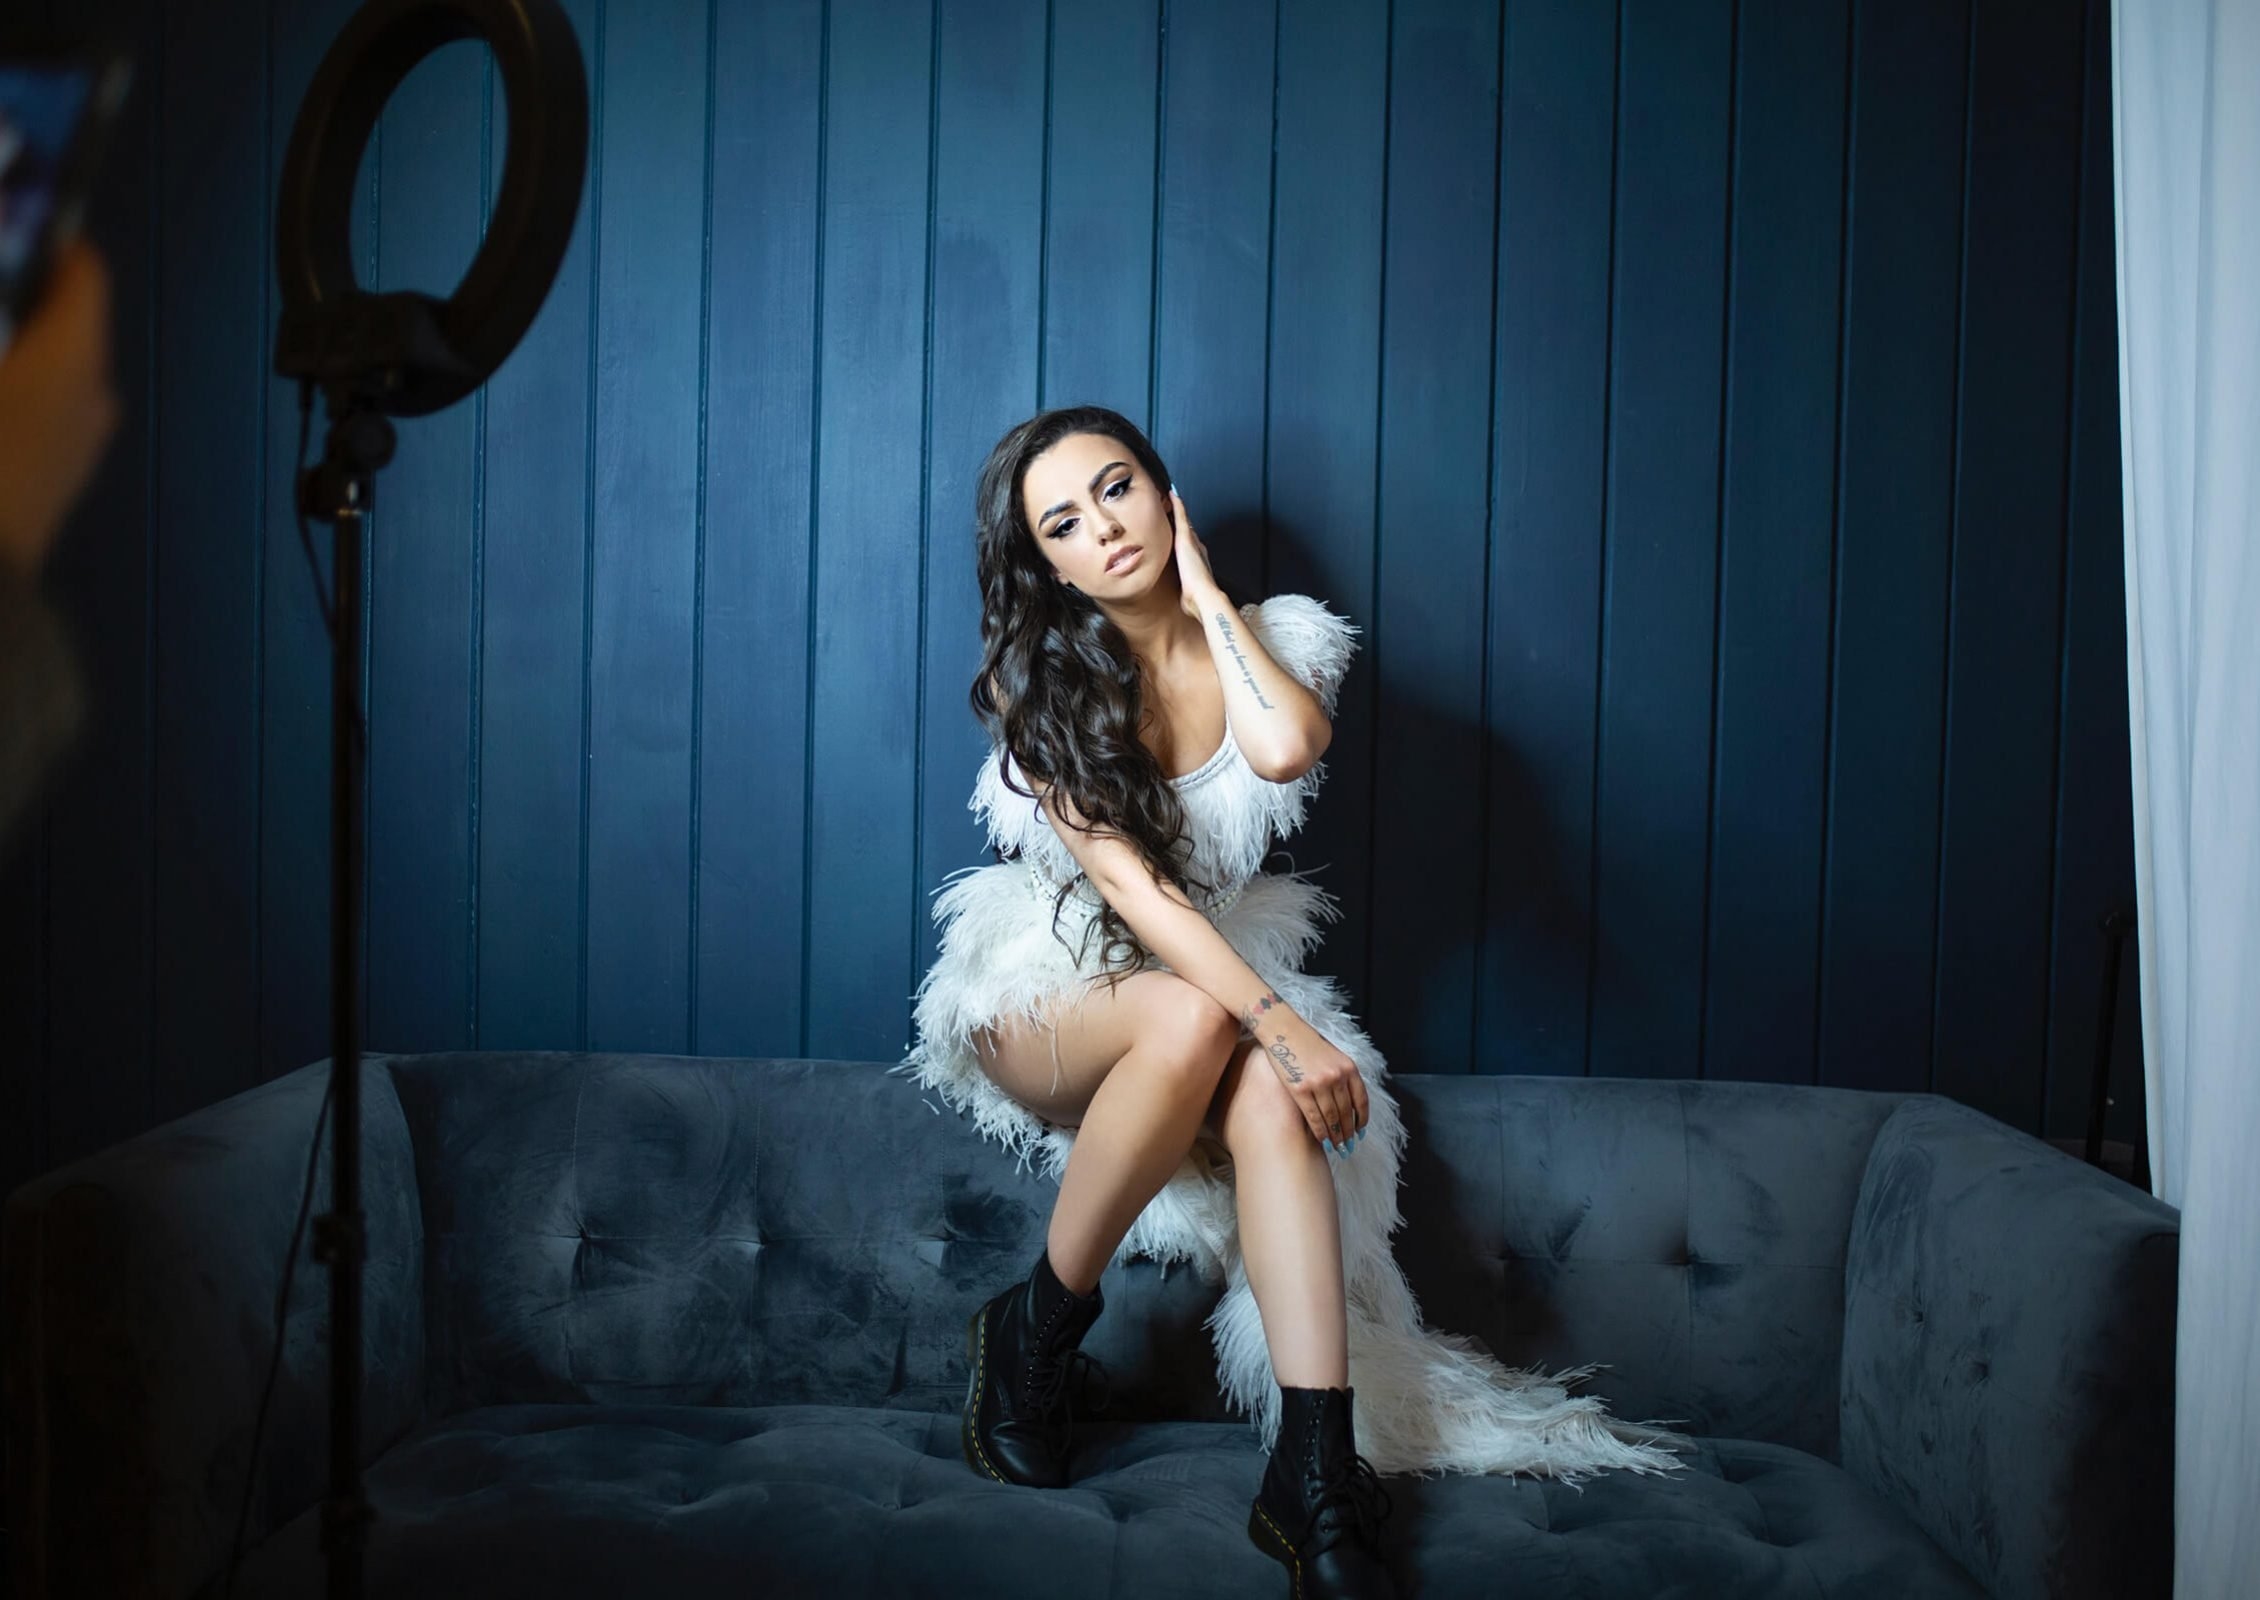 Cher Lloyd 2020 Wallpaper Hd Celebrities 4k Wallpapers Images